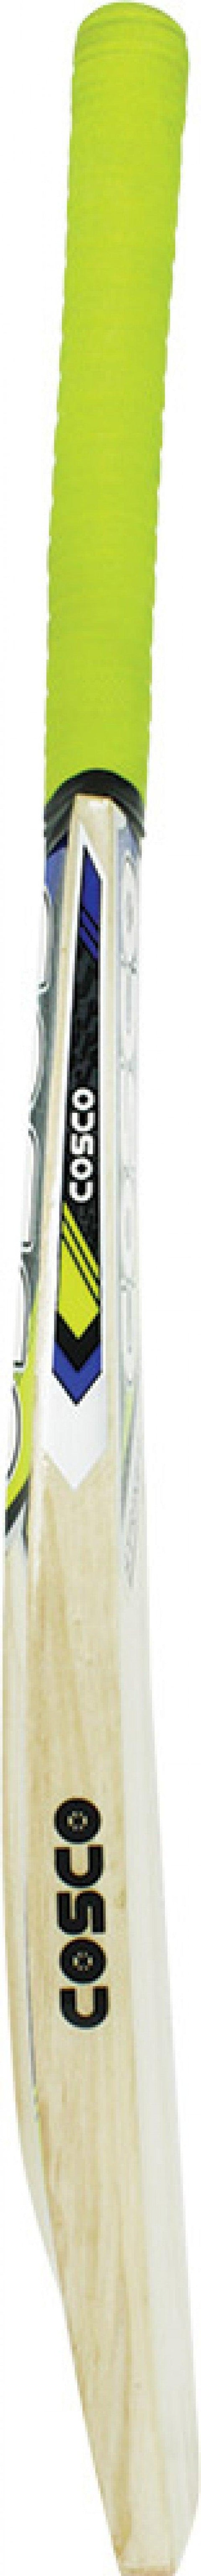 COSCO Striker-4 Tennis Cricket Bat | KIBI Sports - KIBI SPORTS